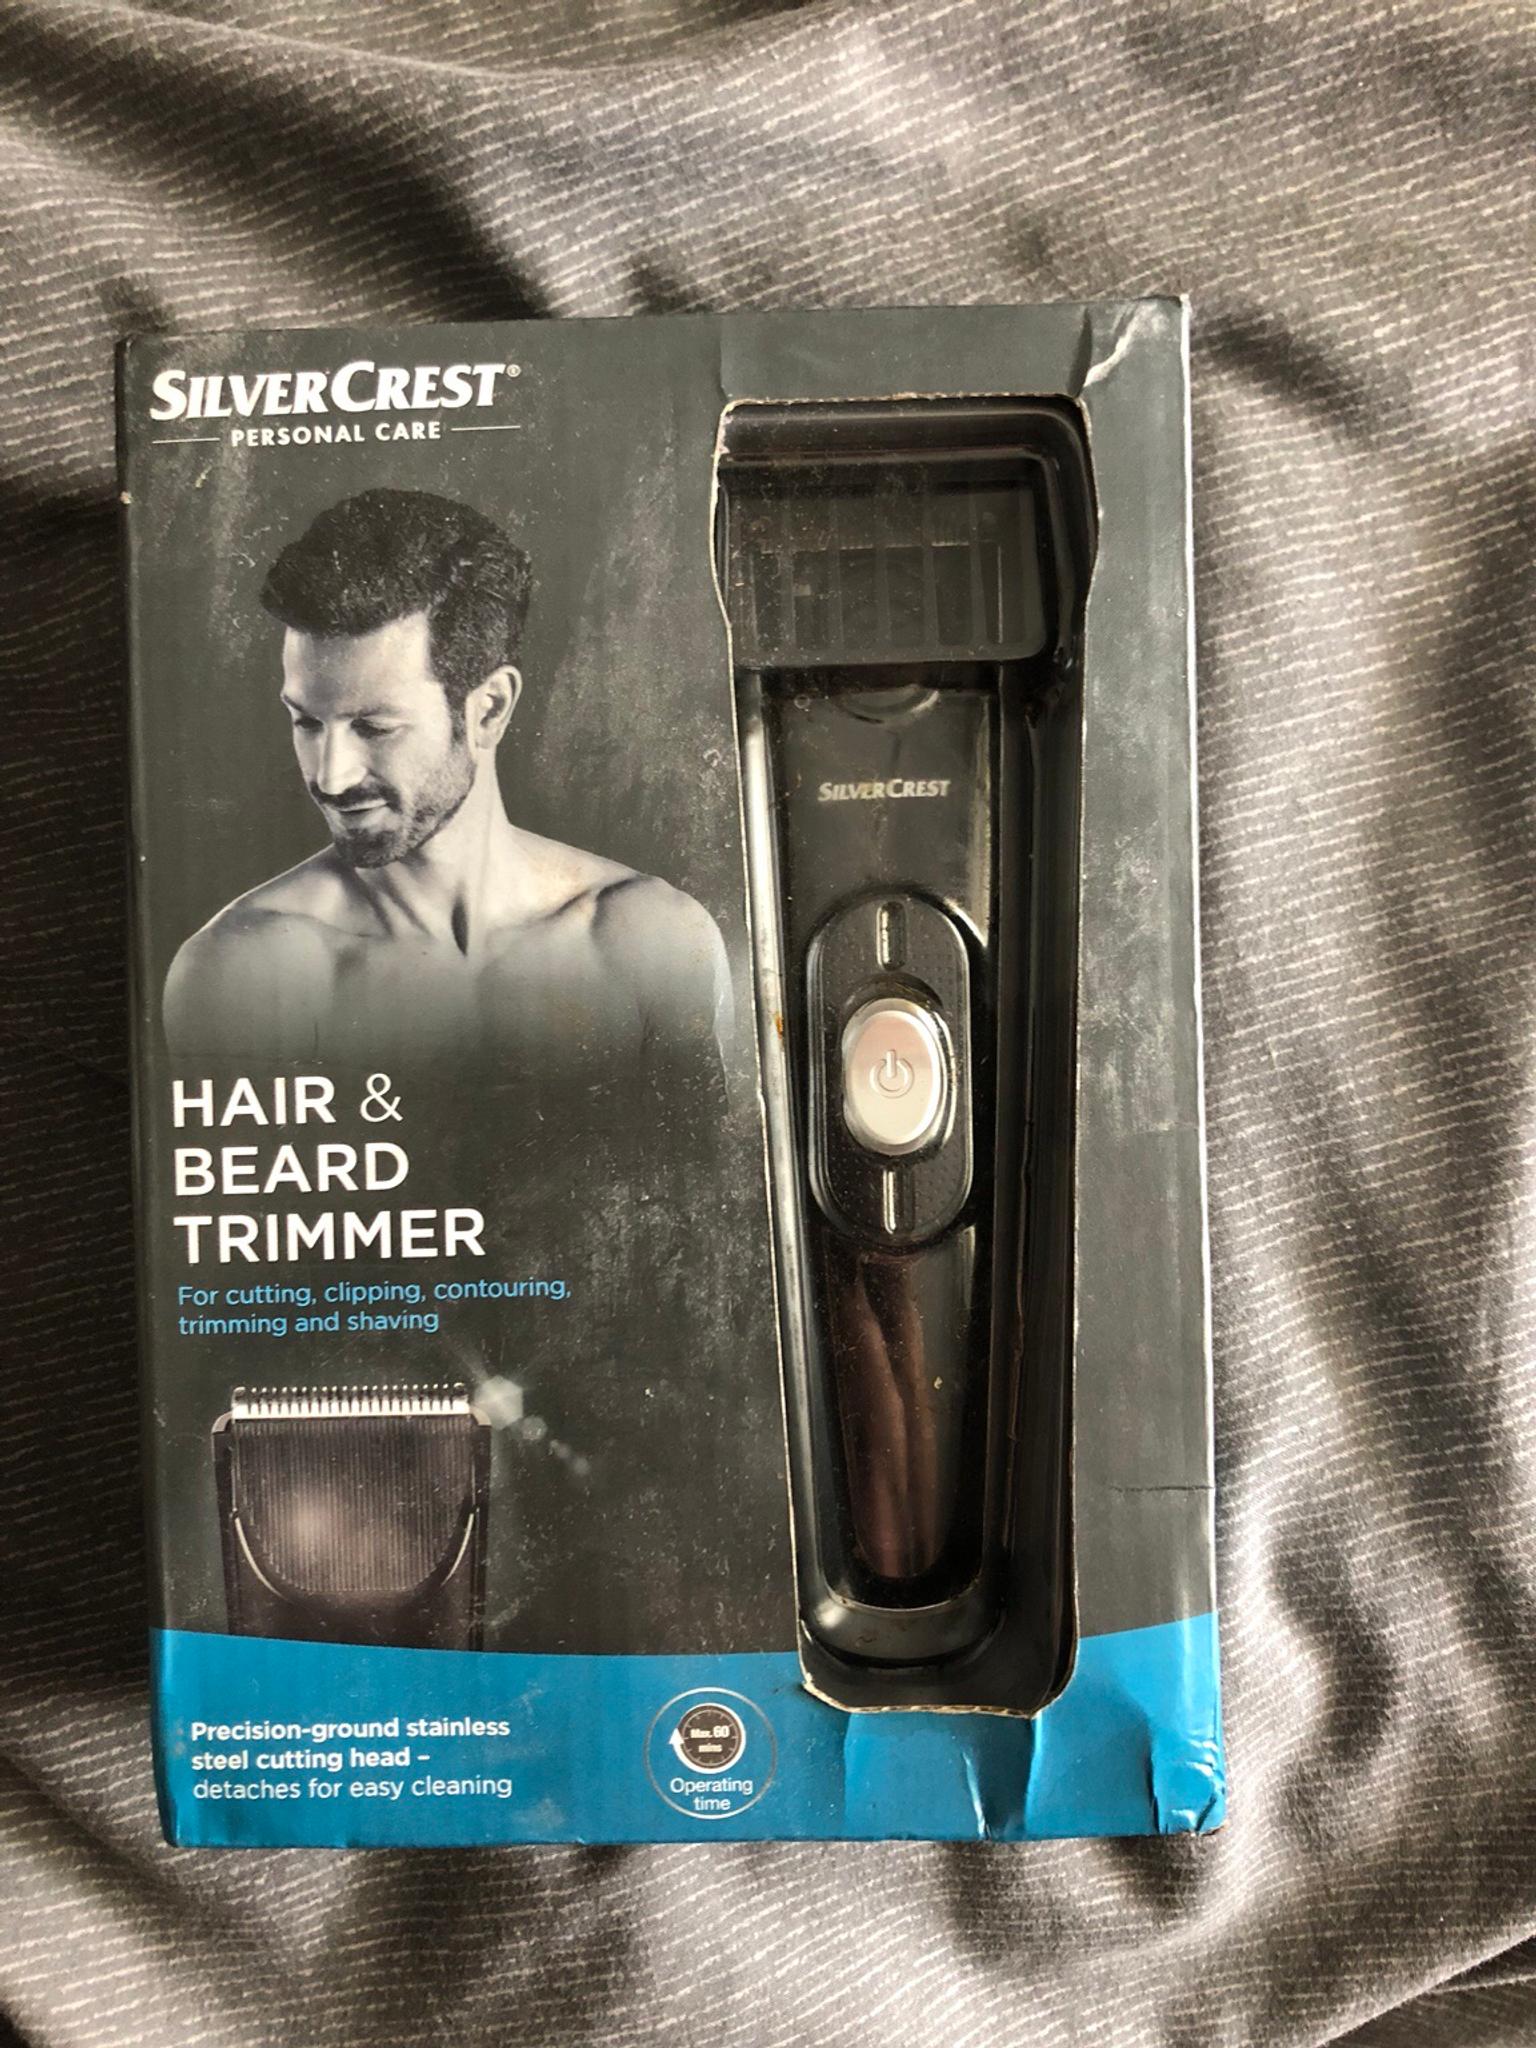 silvercrest personal care hair & beard trimmer